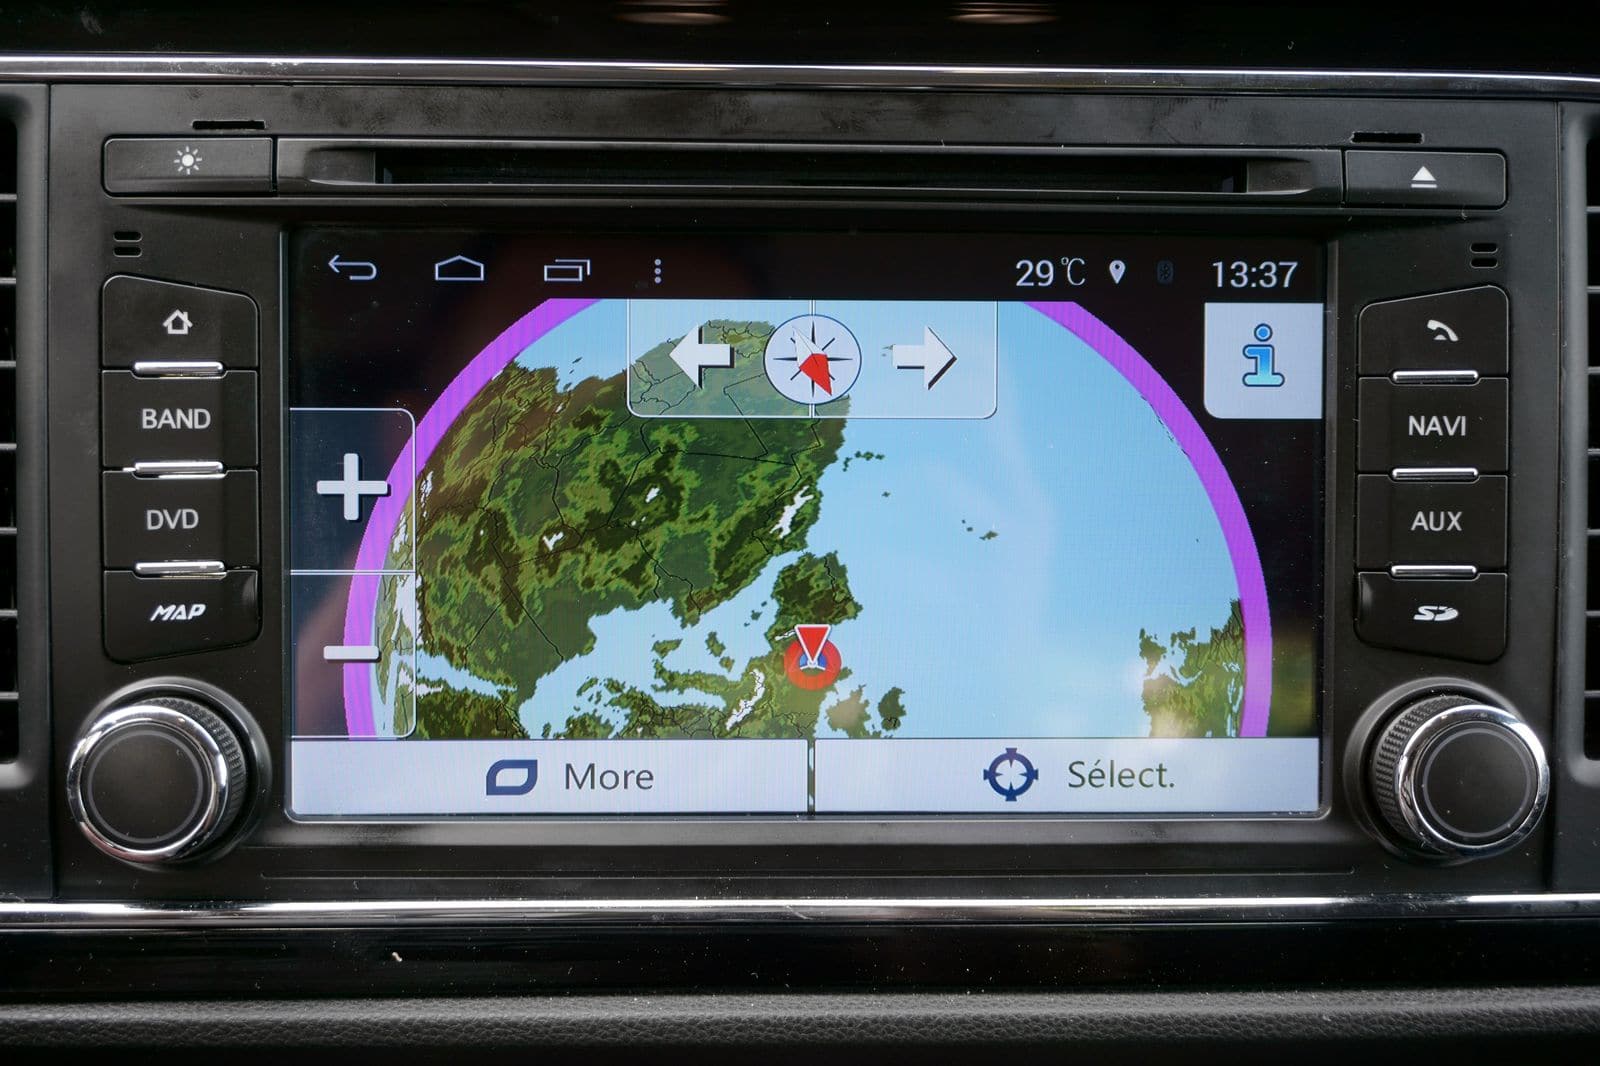 SEAT LEON GPS 1.6 TDi 105 5p occasion abcautofrance (abc auto france) 79 Niort 94_1